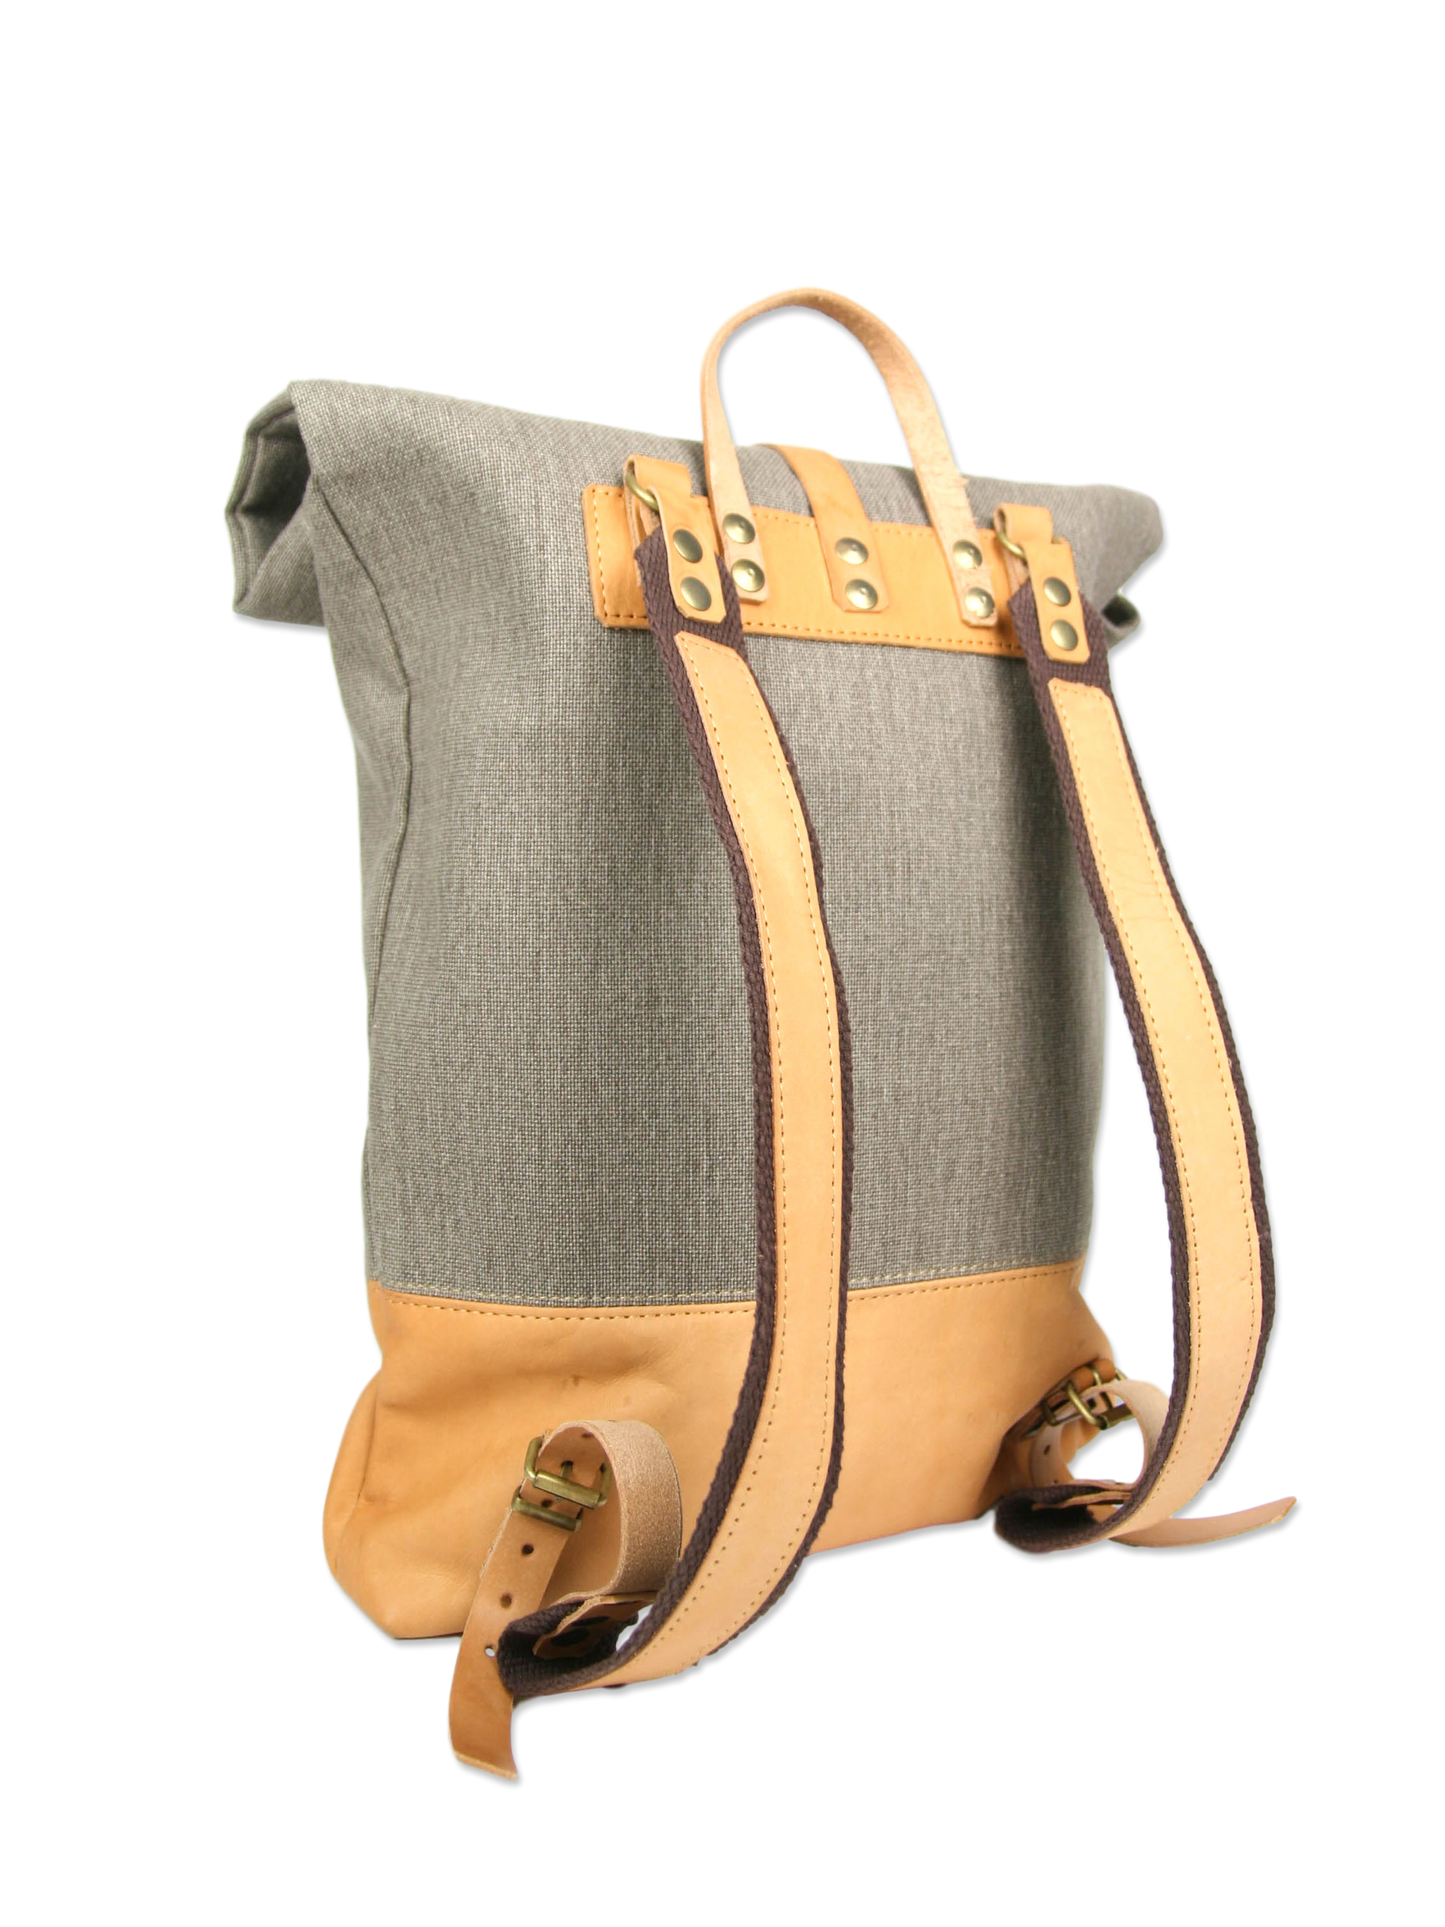 Handcrafted rolltop backpack